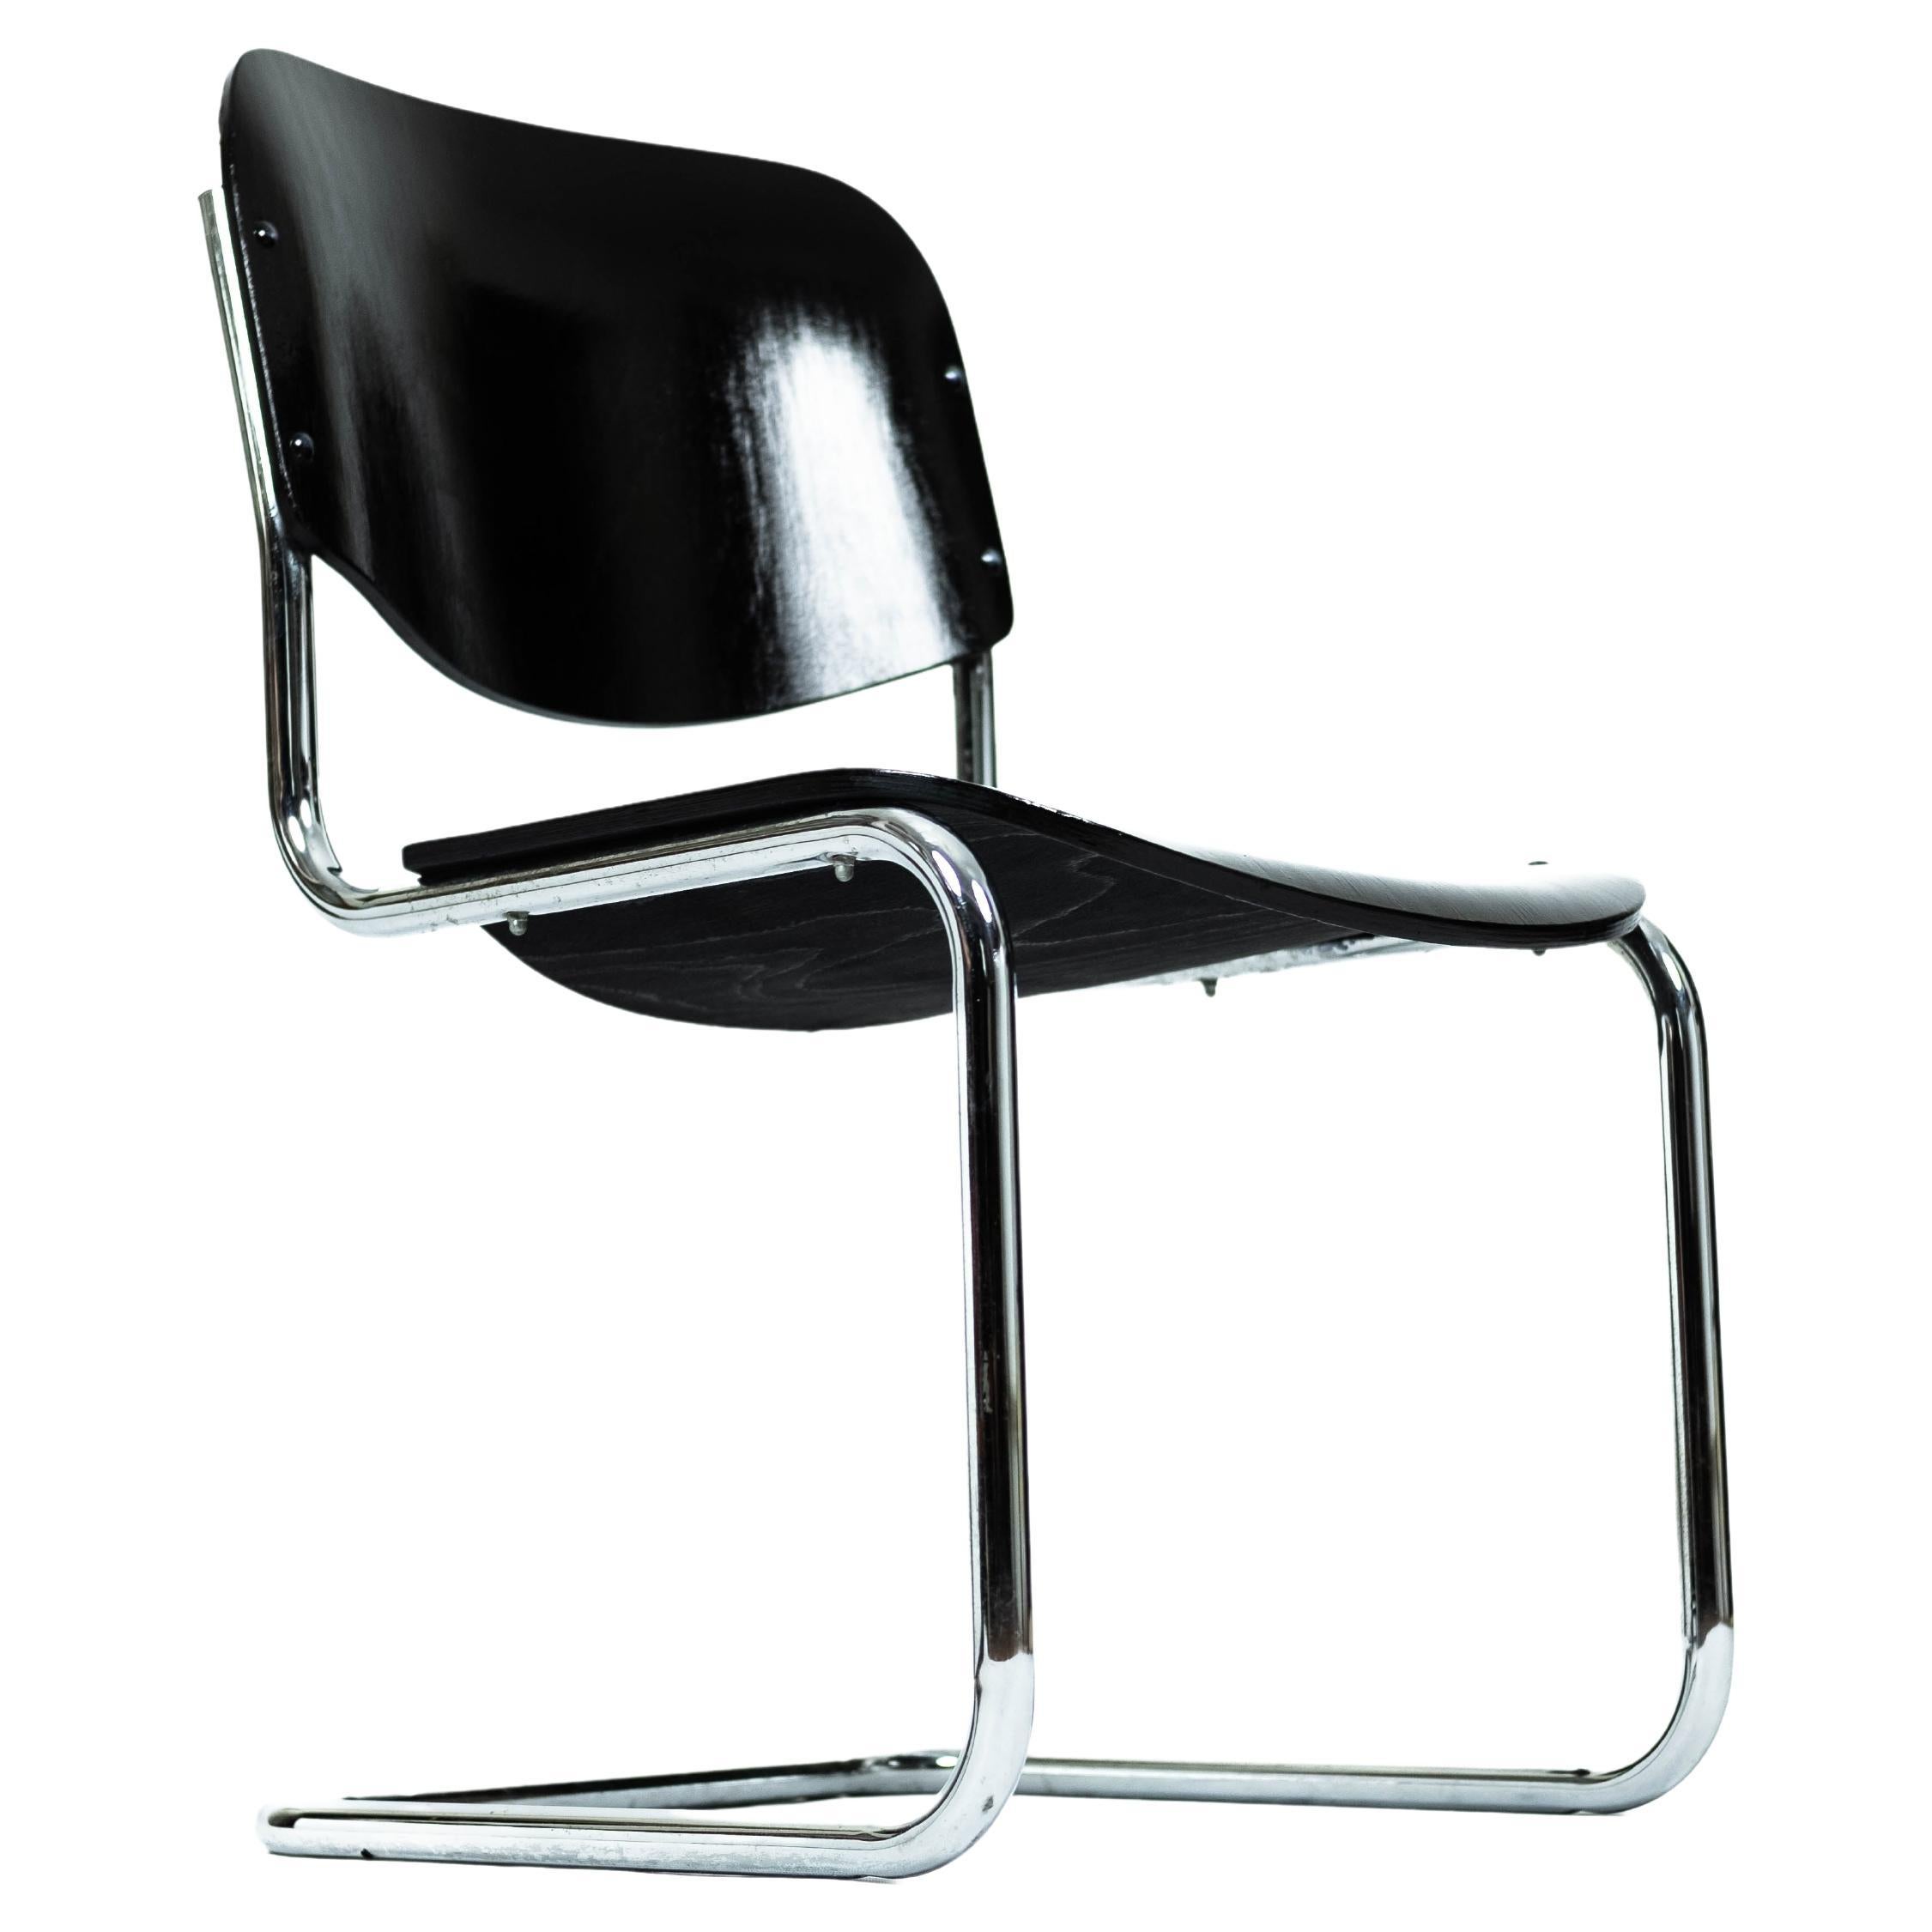 Black Steelpipe Chair in Bauhaus-Style (Vienna, 1970) For Sale